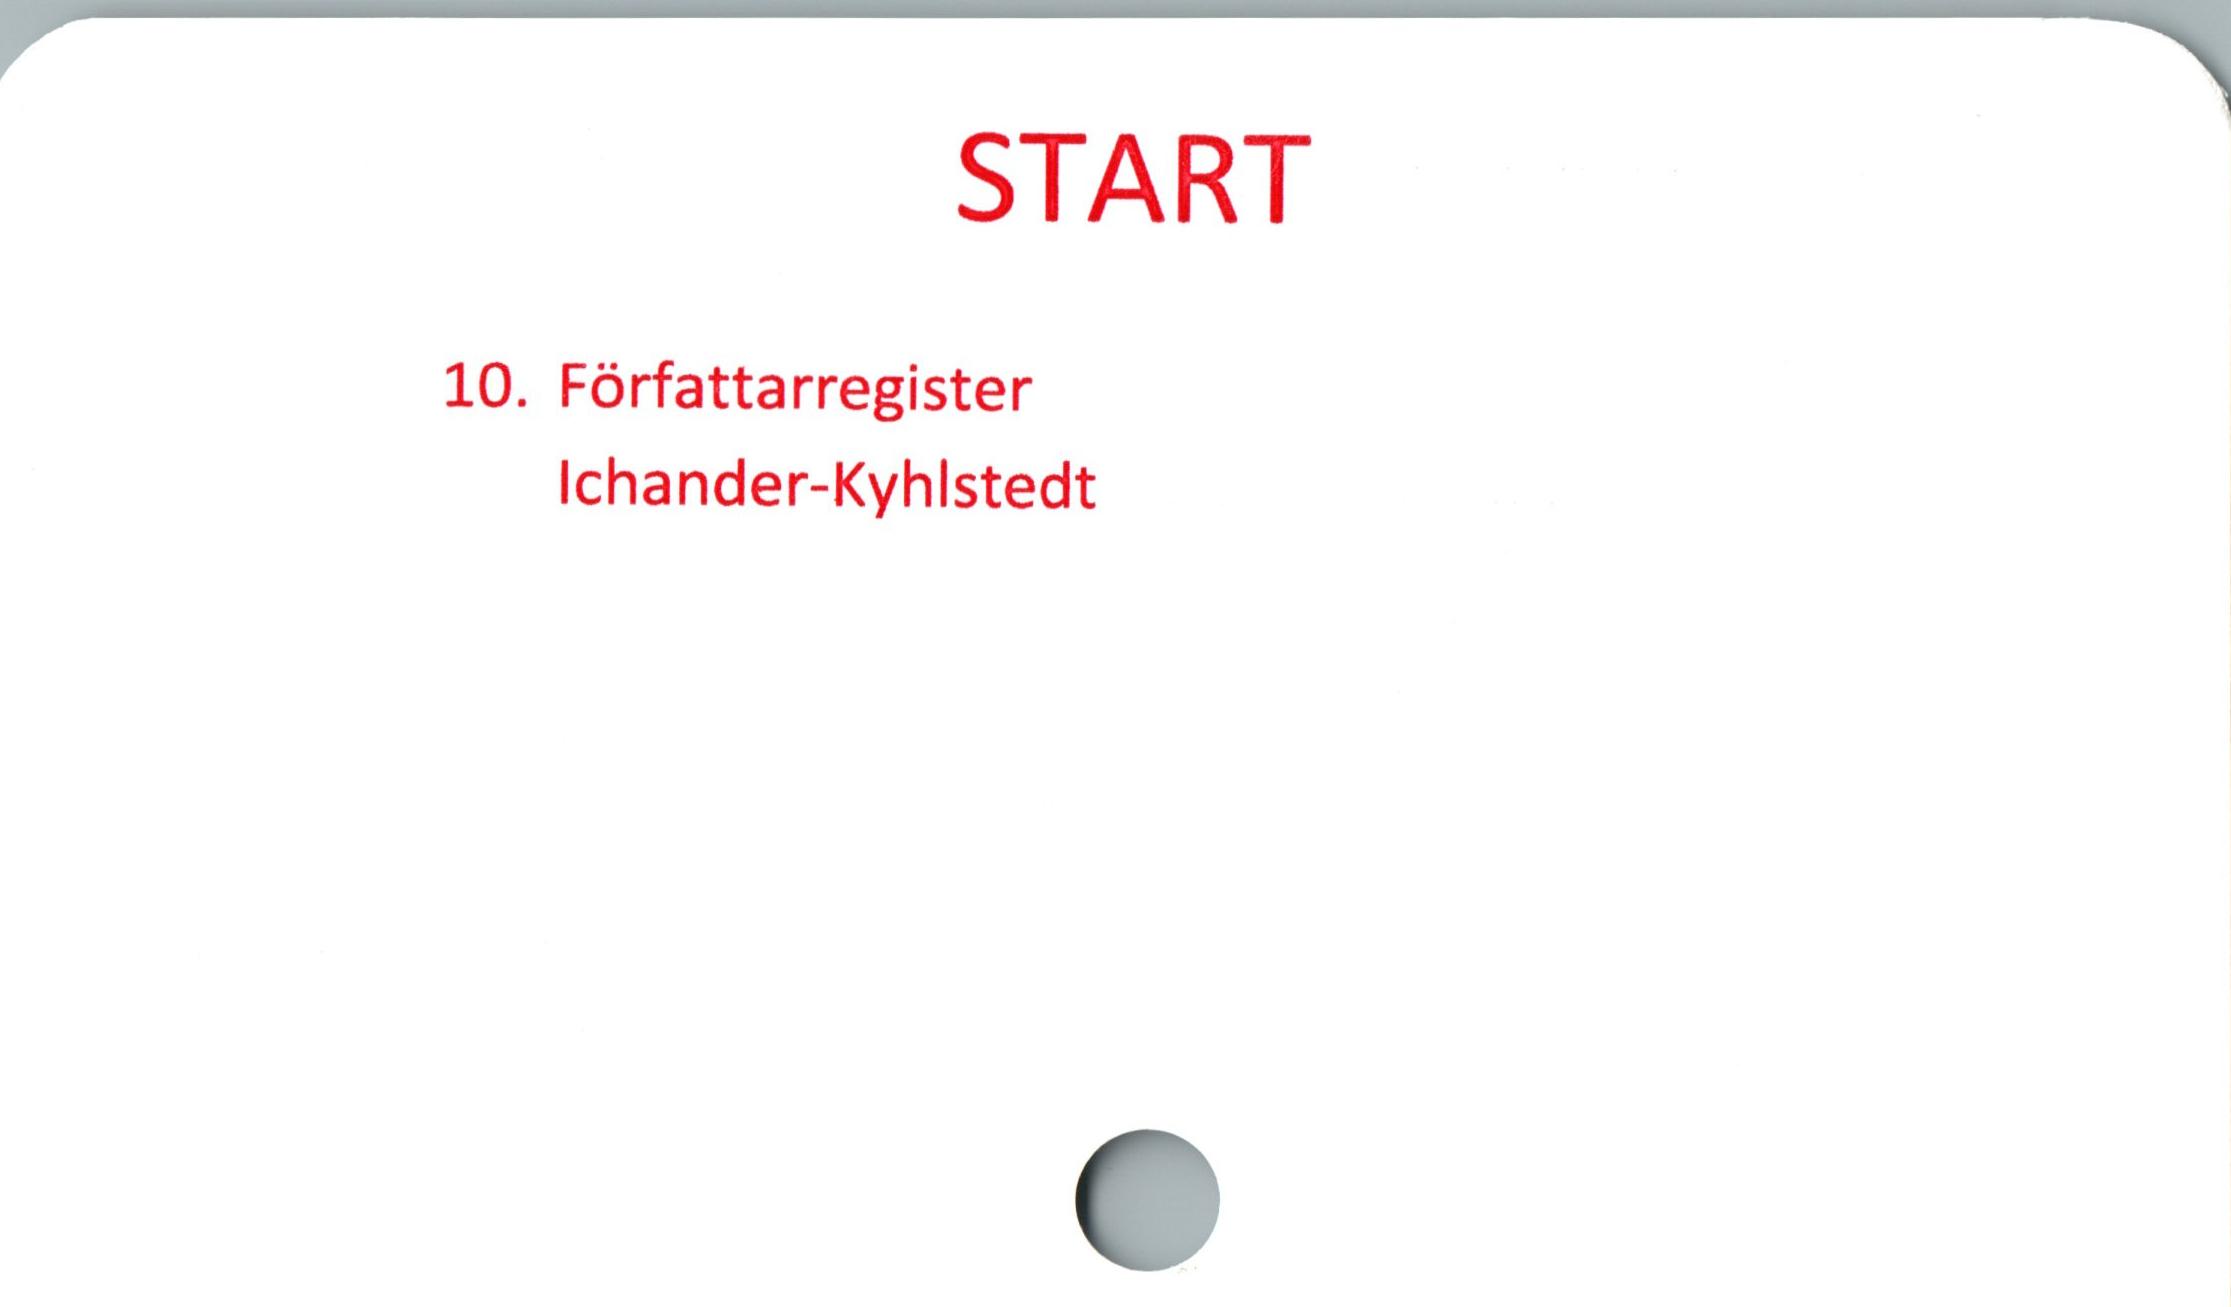  ﻿START

10. Författarregister
Ichander-Kyhlstedt